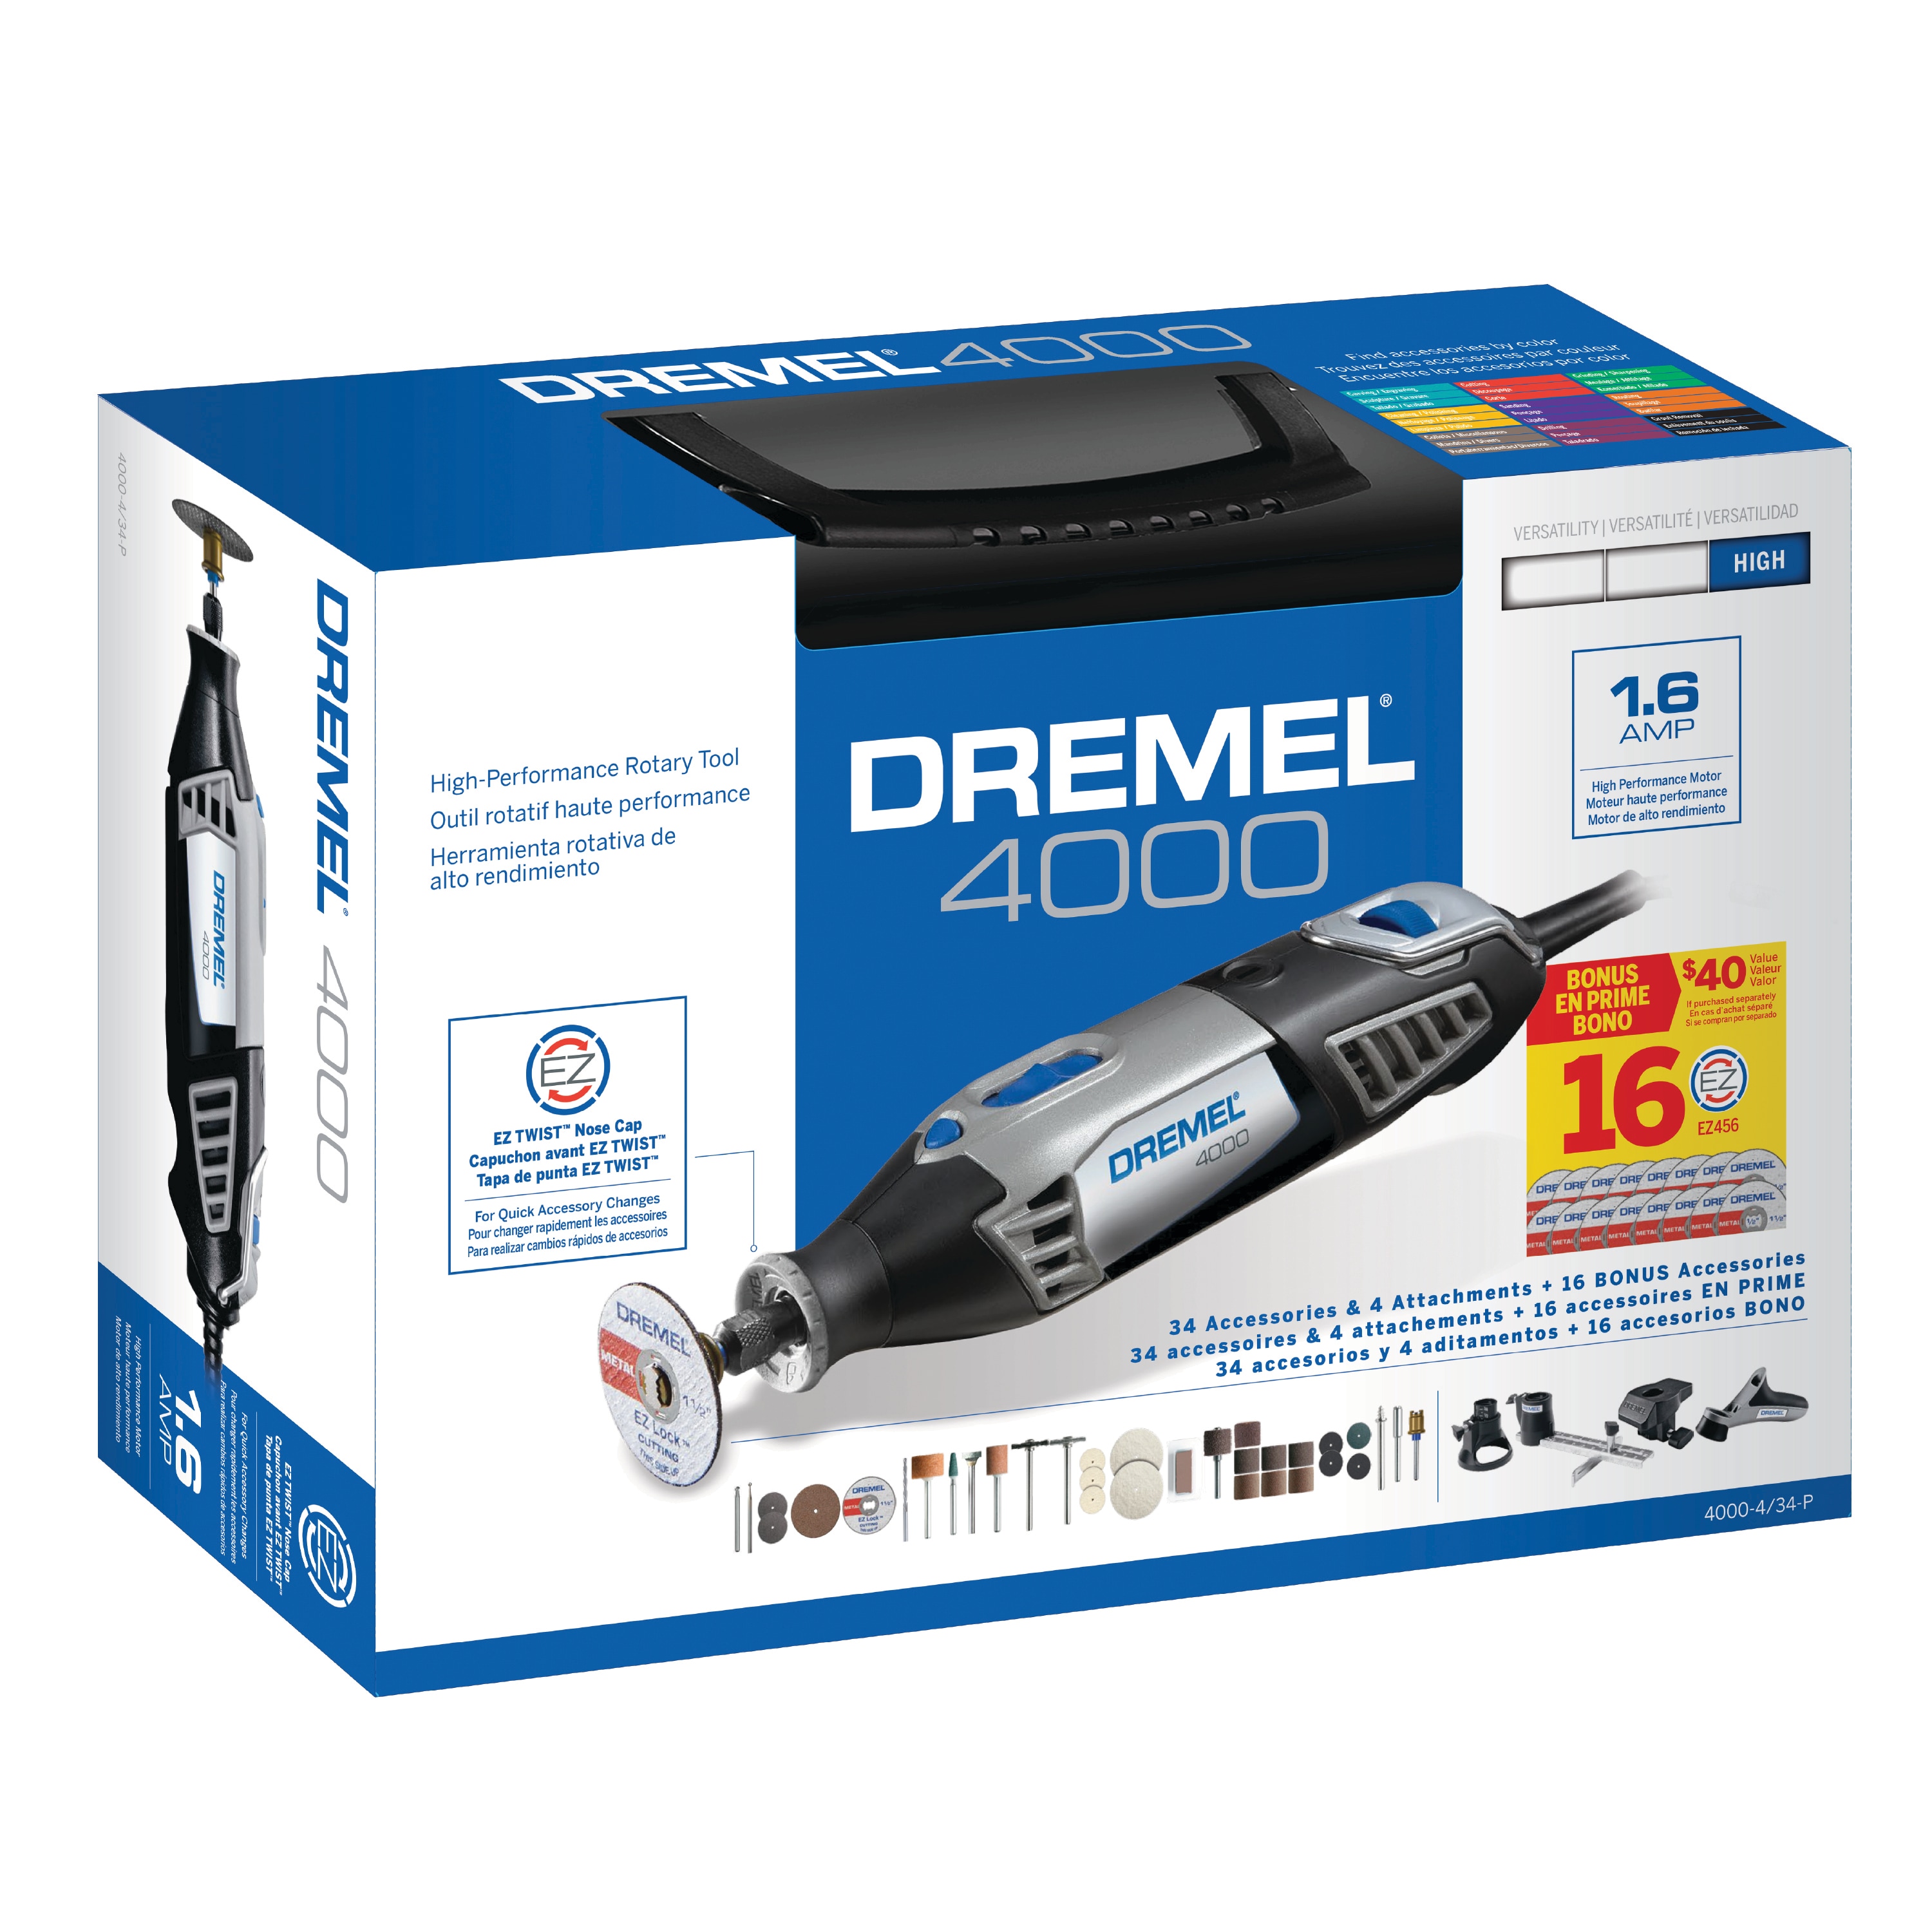 Dremel 4000 4/65 - Lowest Price Guarantee